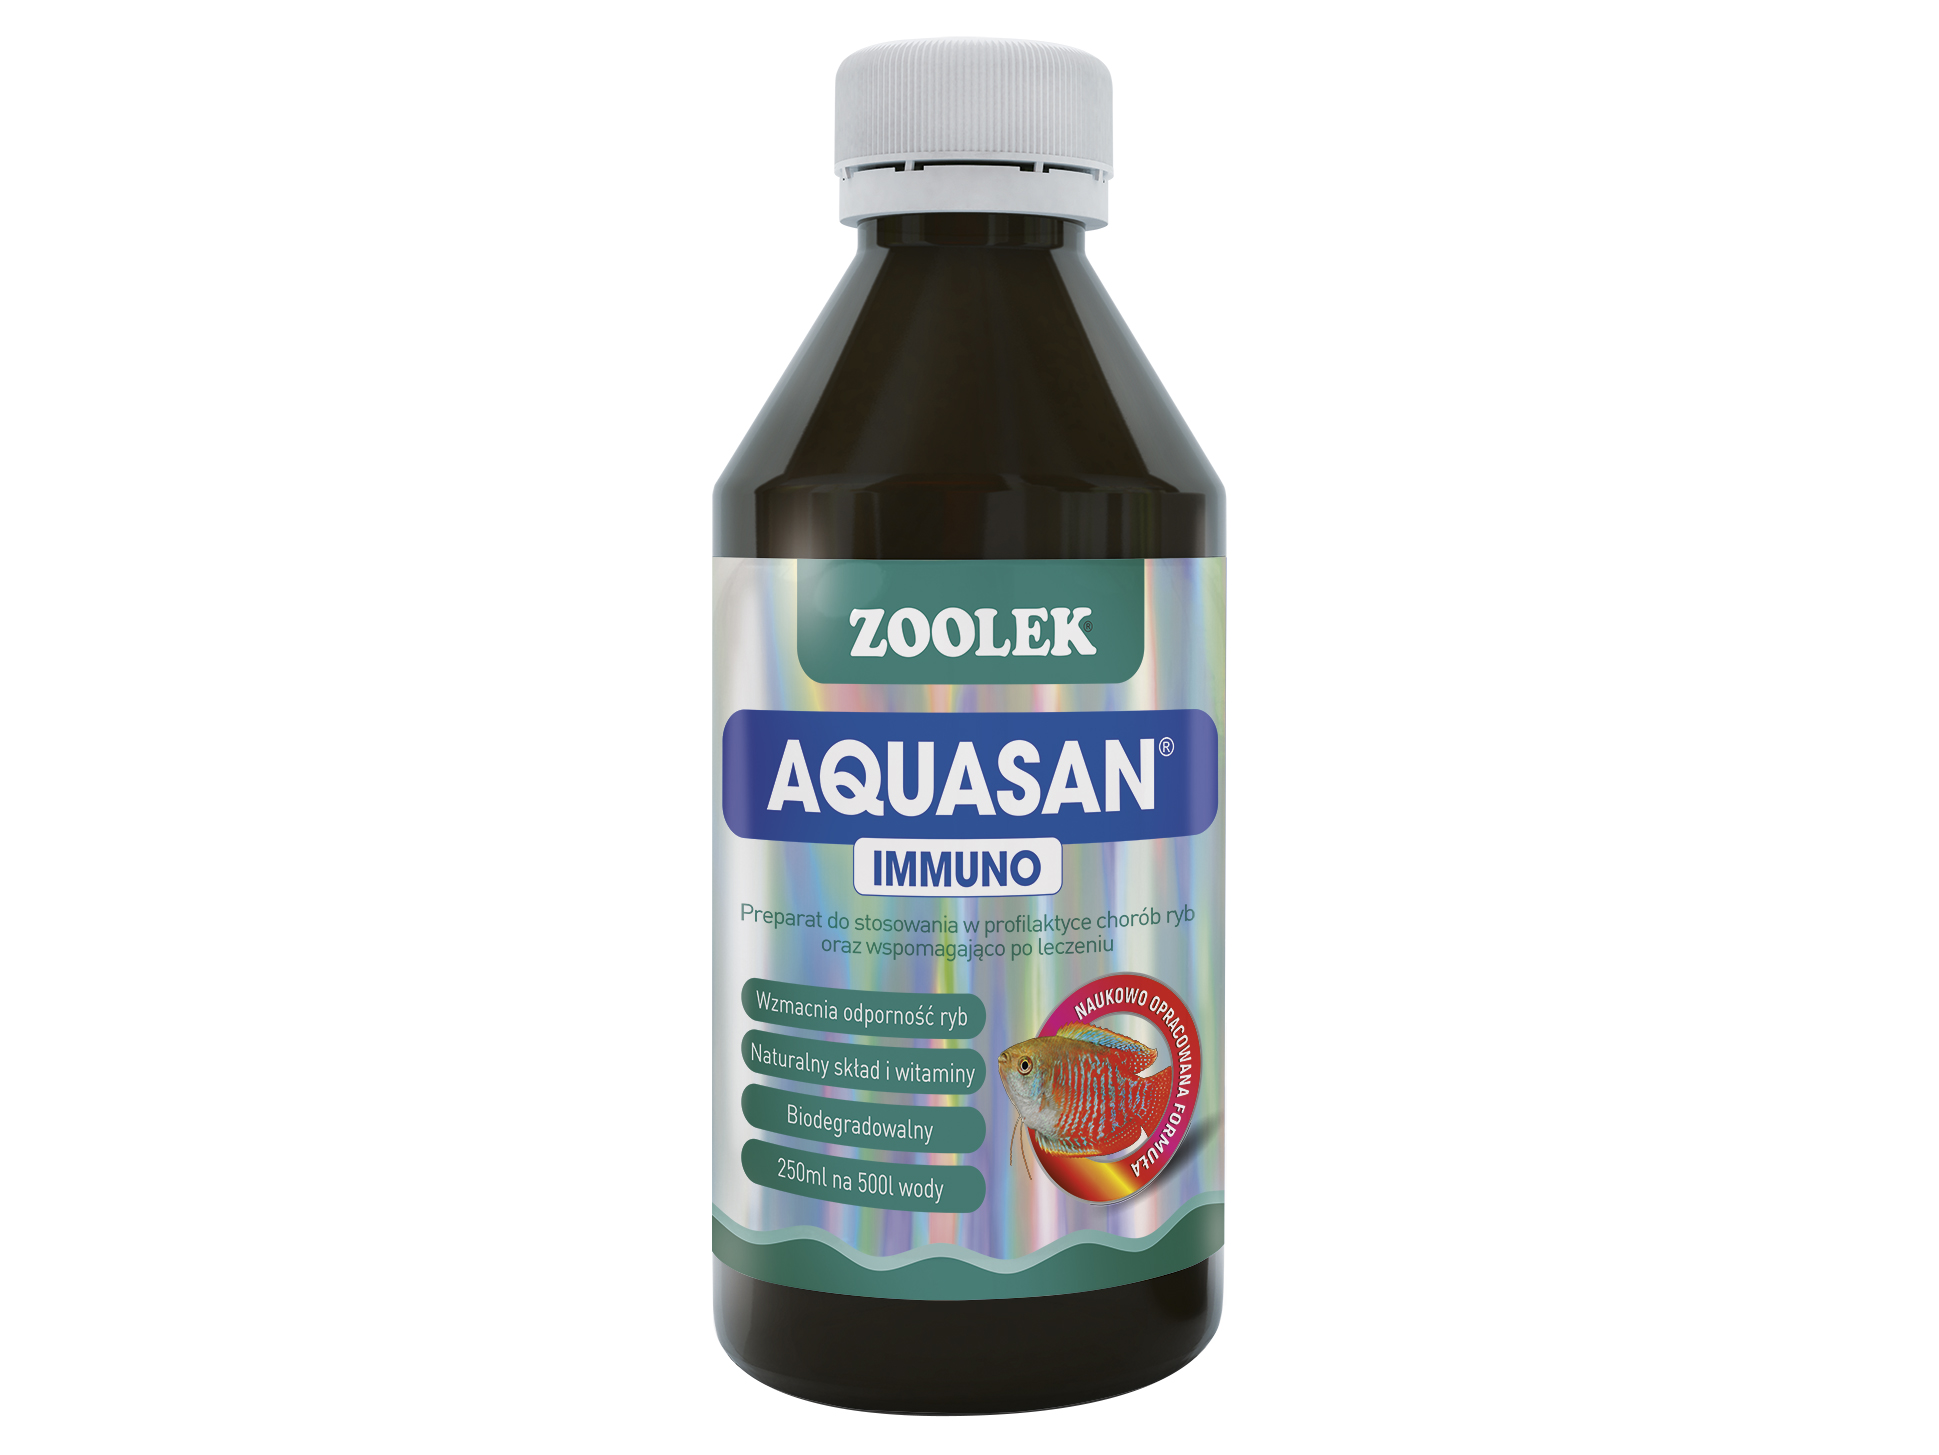 Zoolek Aquasan Immuno поддерживает после лечения 250 мл